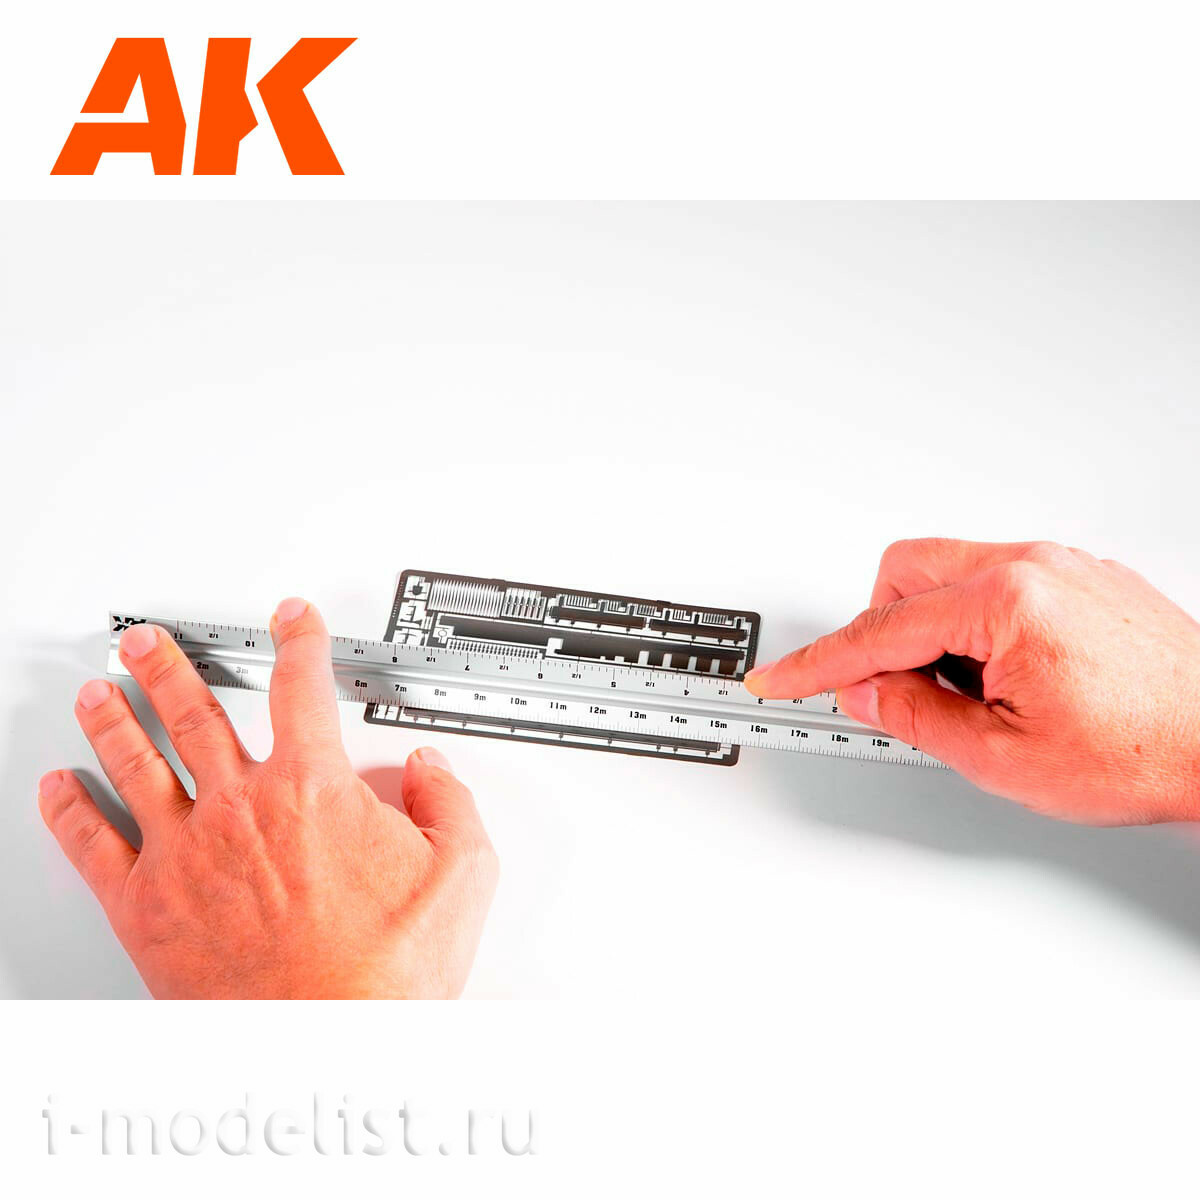 AK9049 AK Interactive Металлическая многомасштабная треугольная линейка .